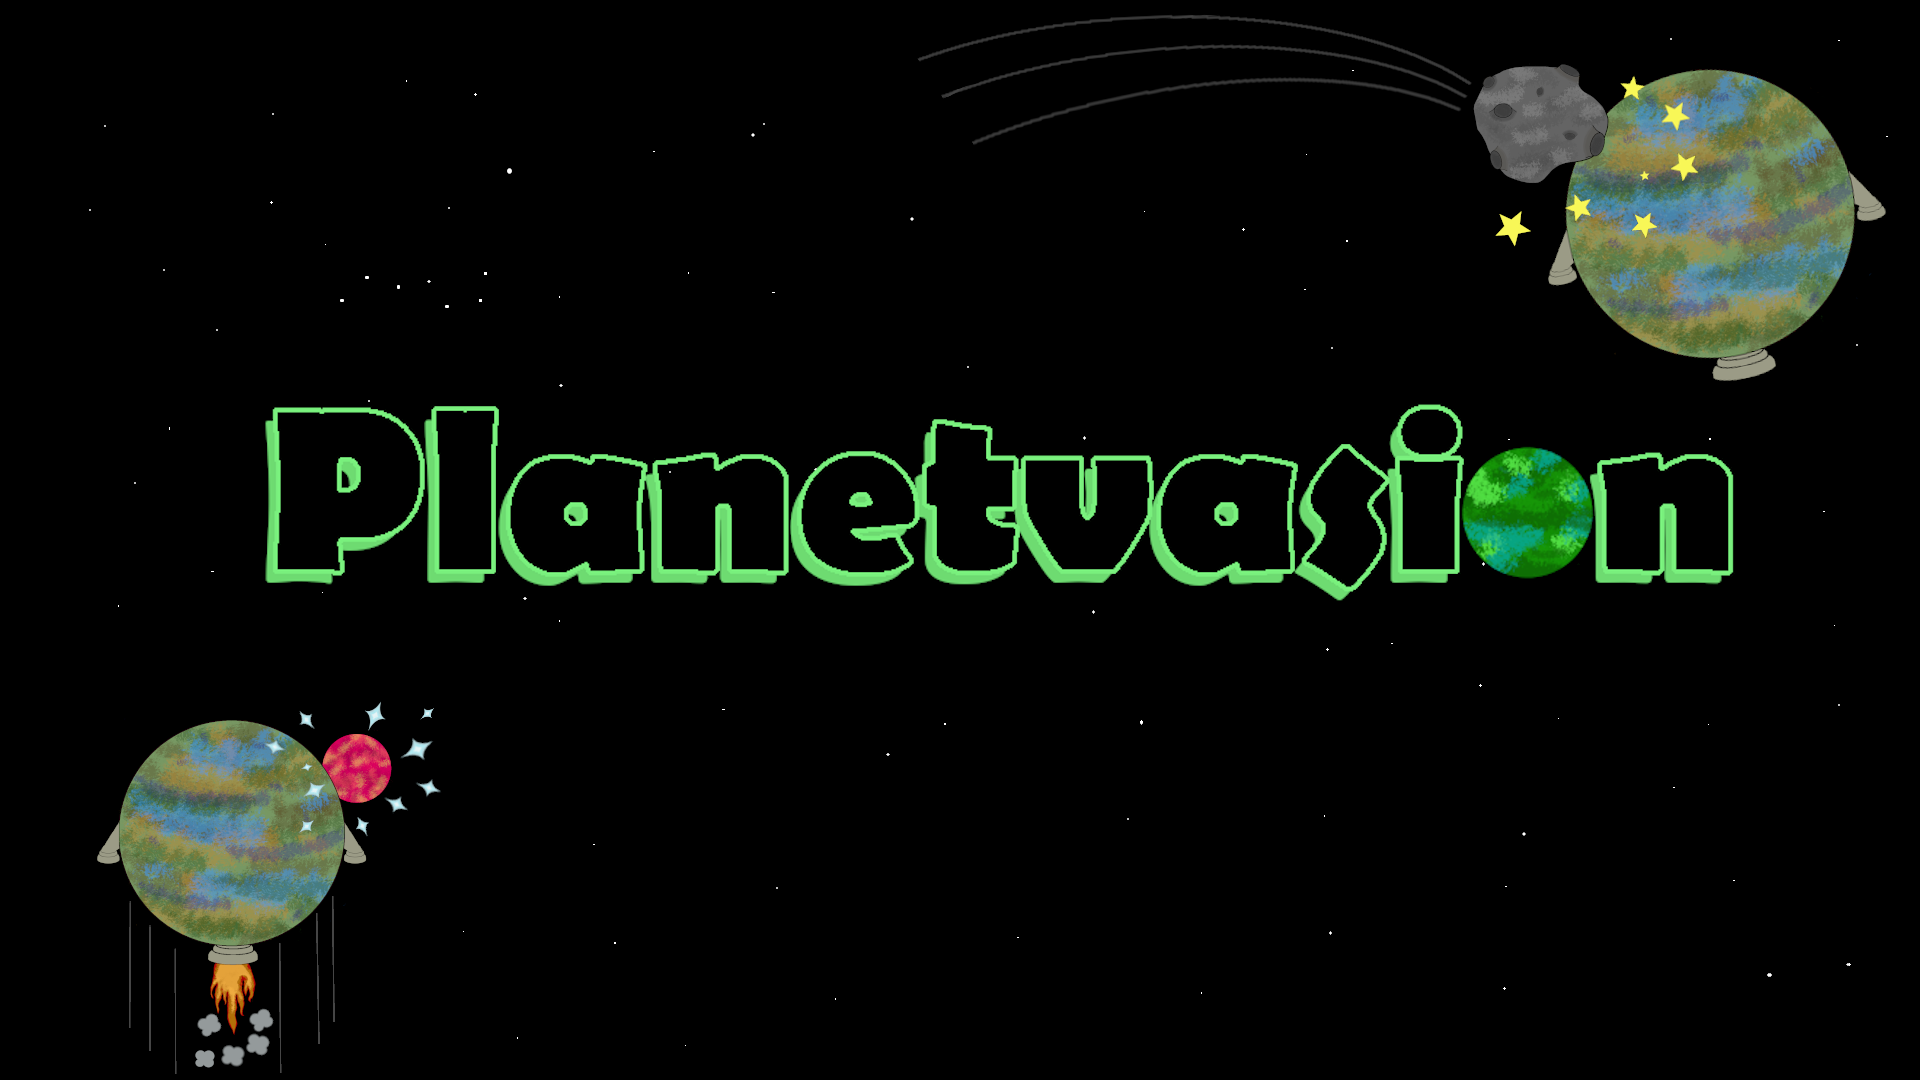 Planetvasion